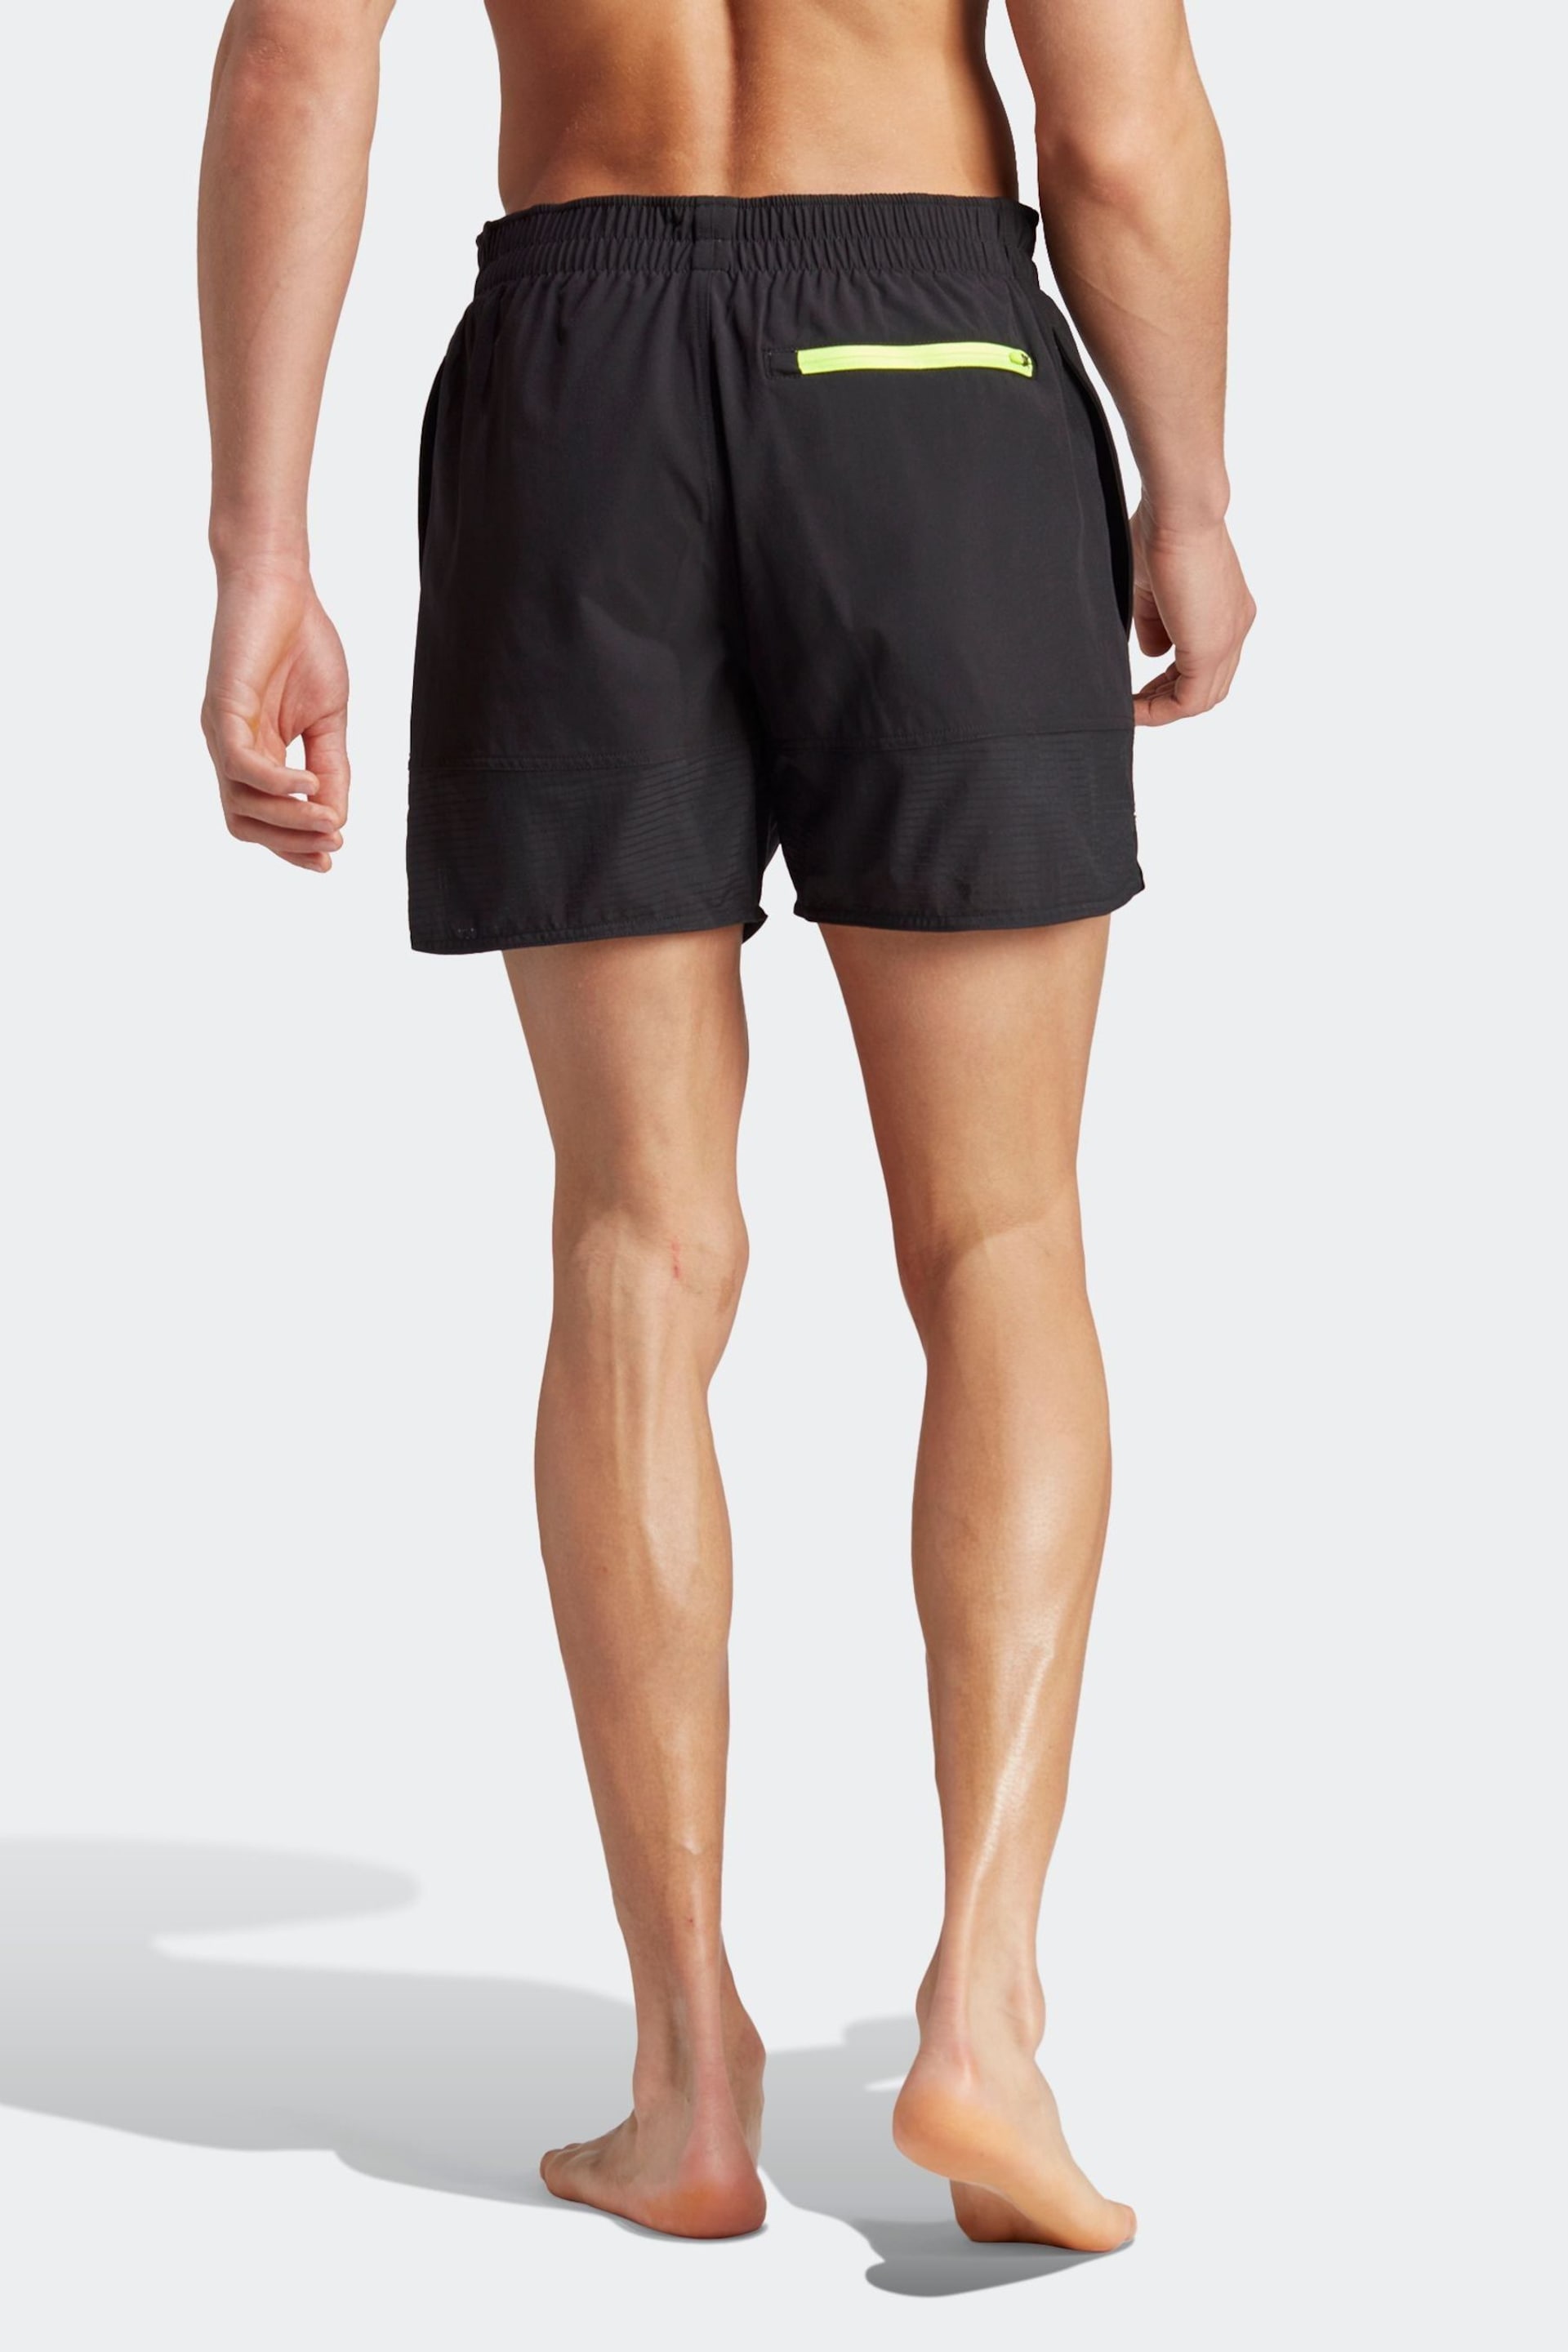 adidas Black Versatile Swim Shorts - Image 3 of 6